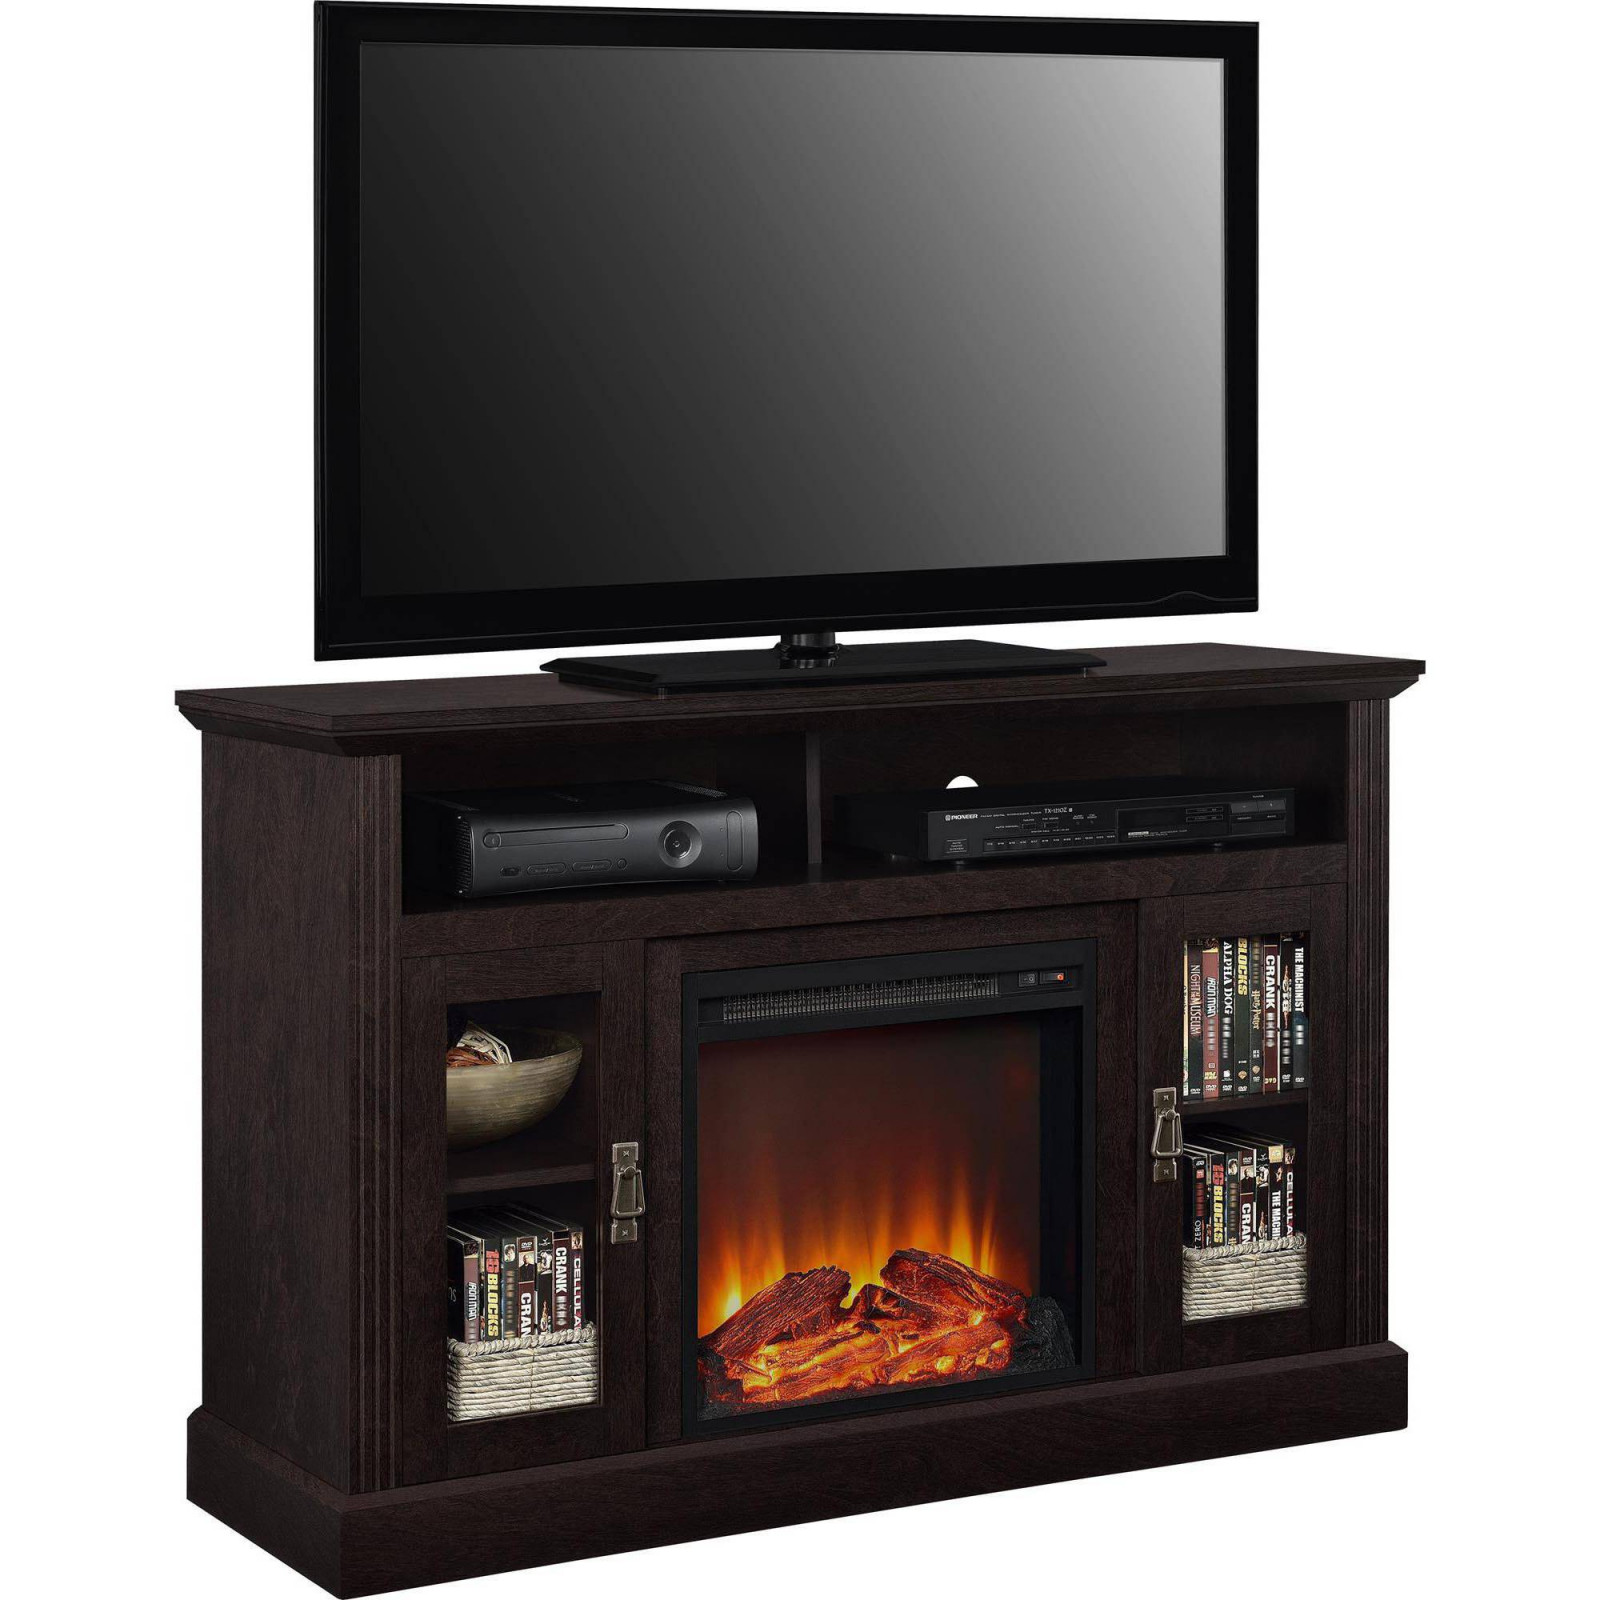 Ikea Electric Fireplace Inspirational 35 Minimaliste Electric Fireplace Tv Stand